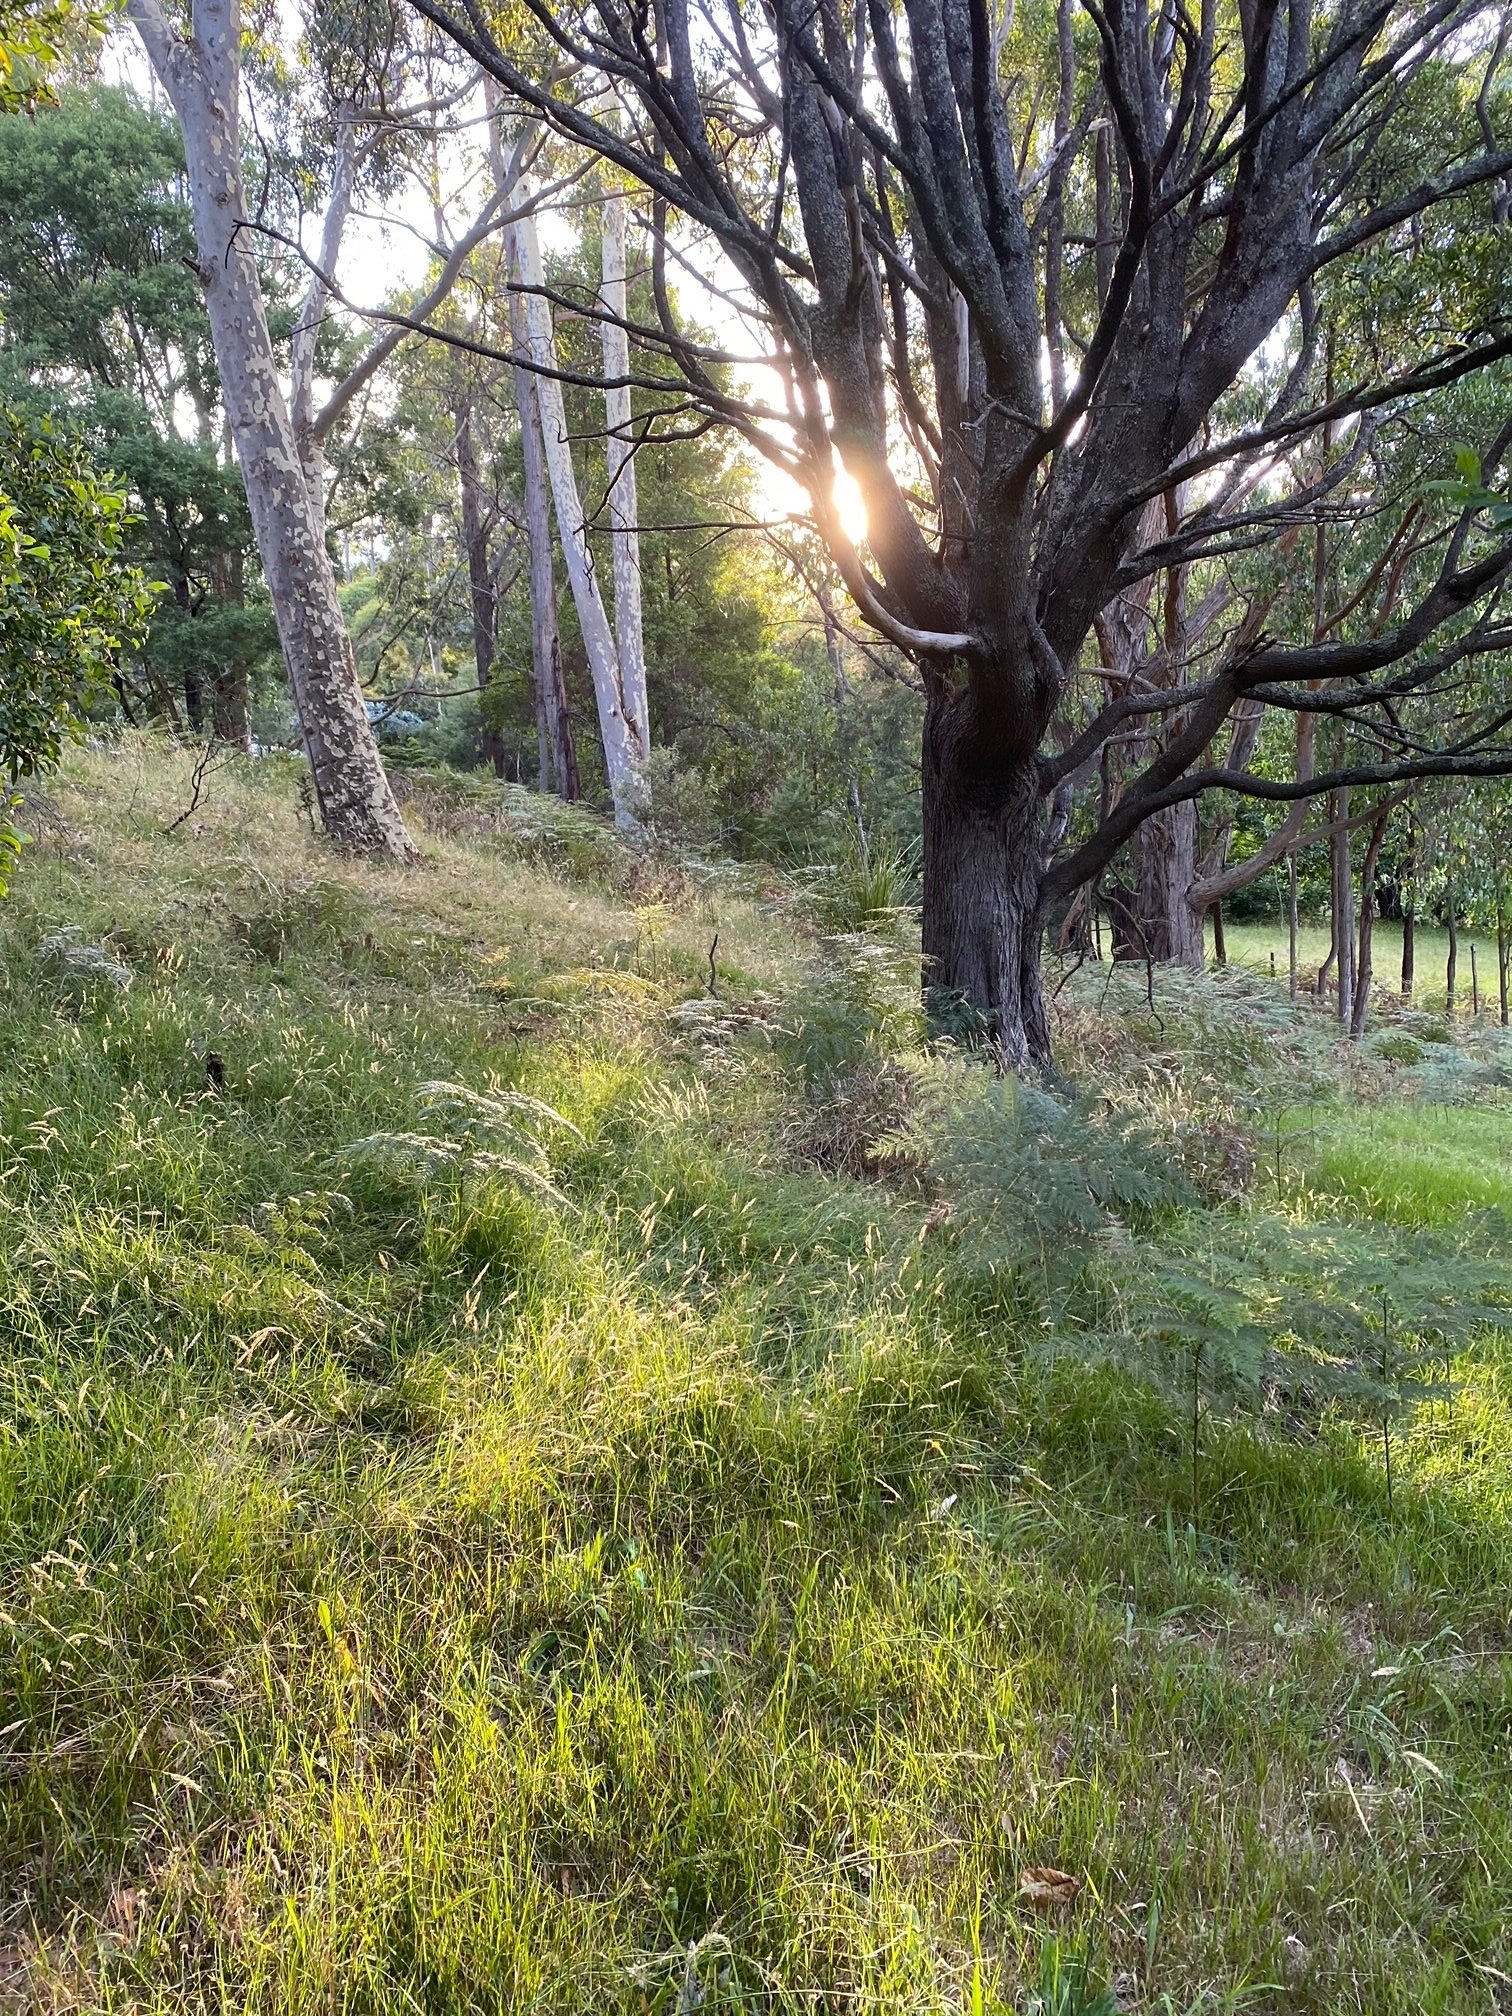 Grassy bank with sun shining through trees